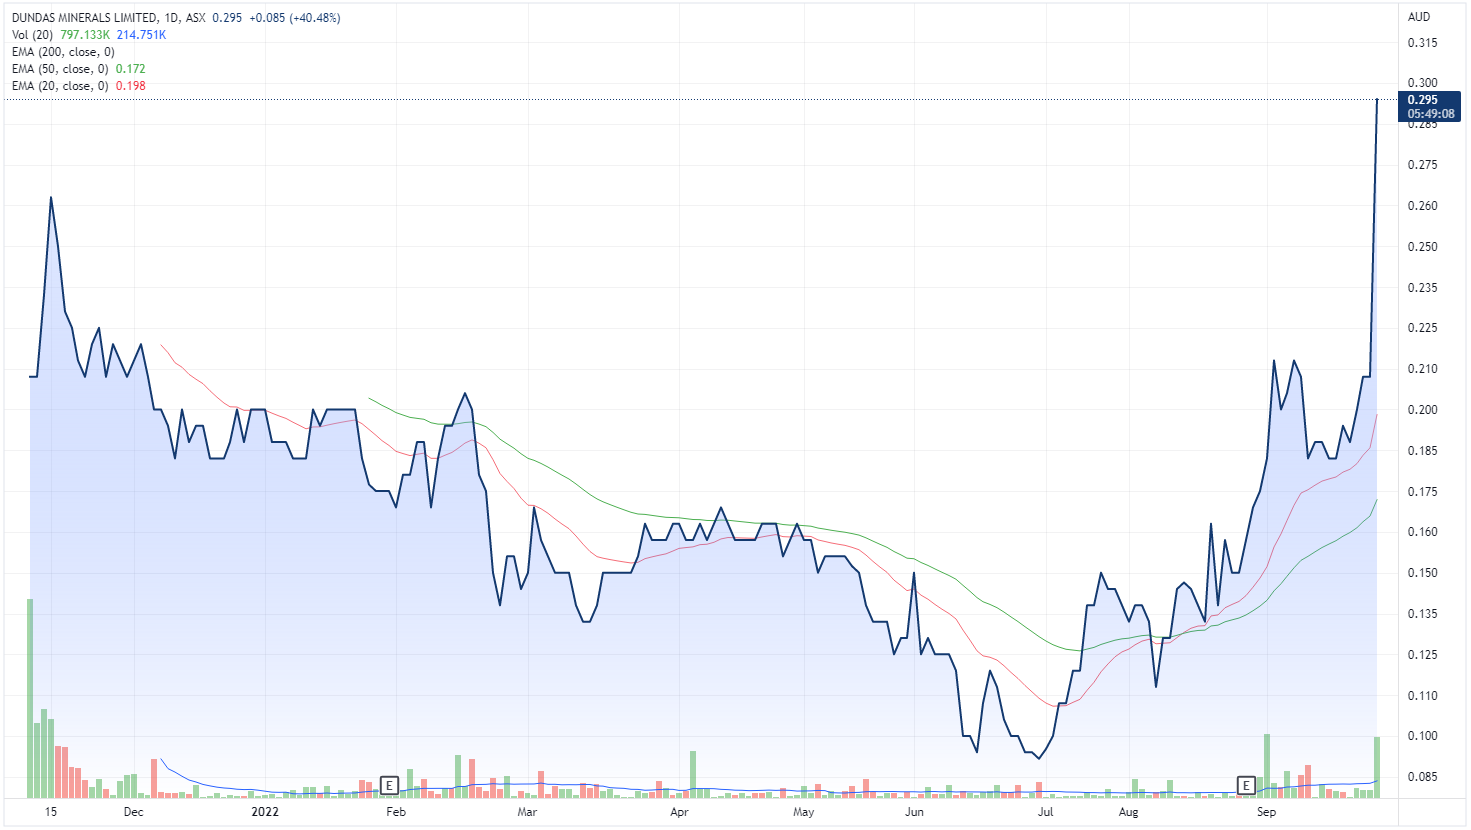 Dundas share price chart